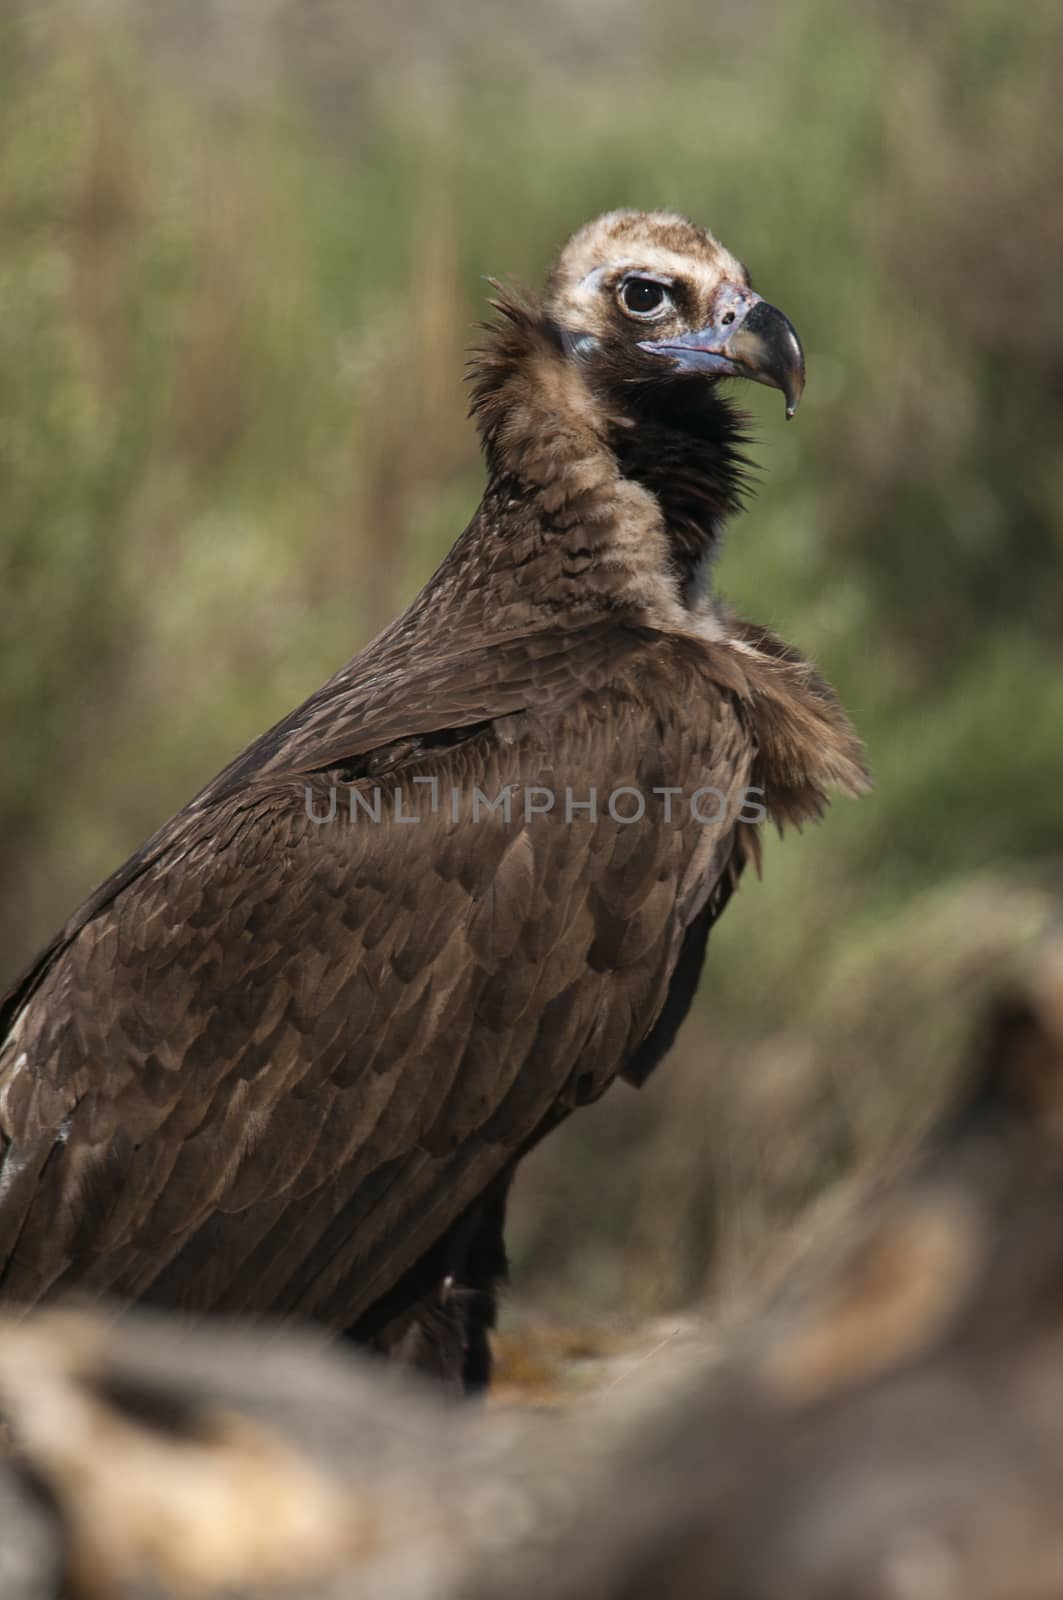 Cinereous (Eurasian Black) Vulture (Aegypius monachus), Full Len by jalonsohu@gmail.com